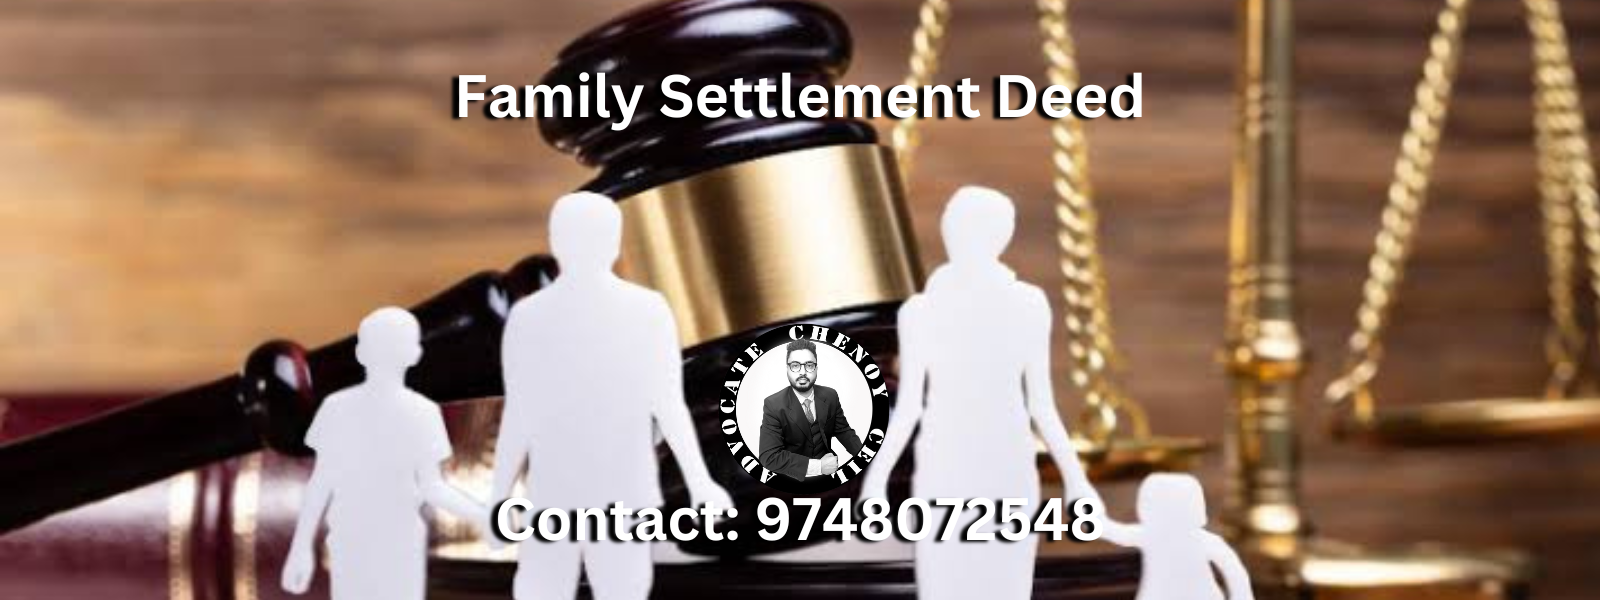 Deed of Family Settlement Format